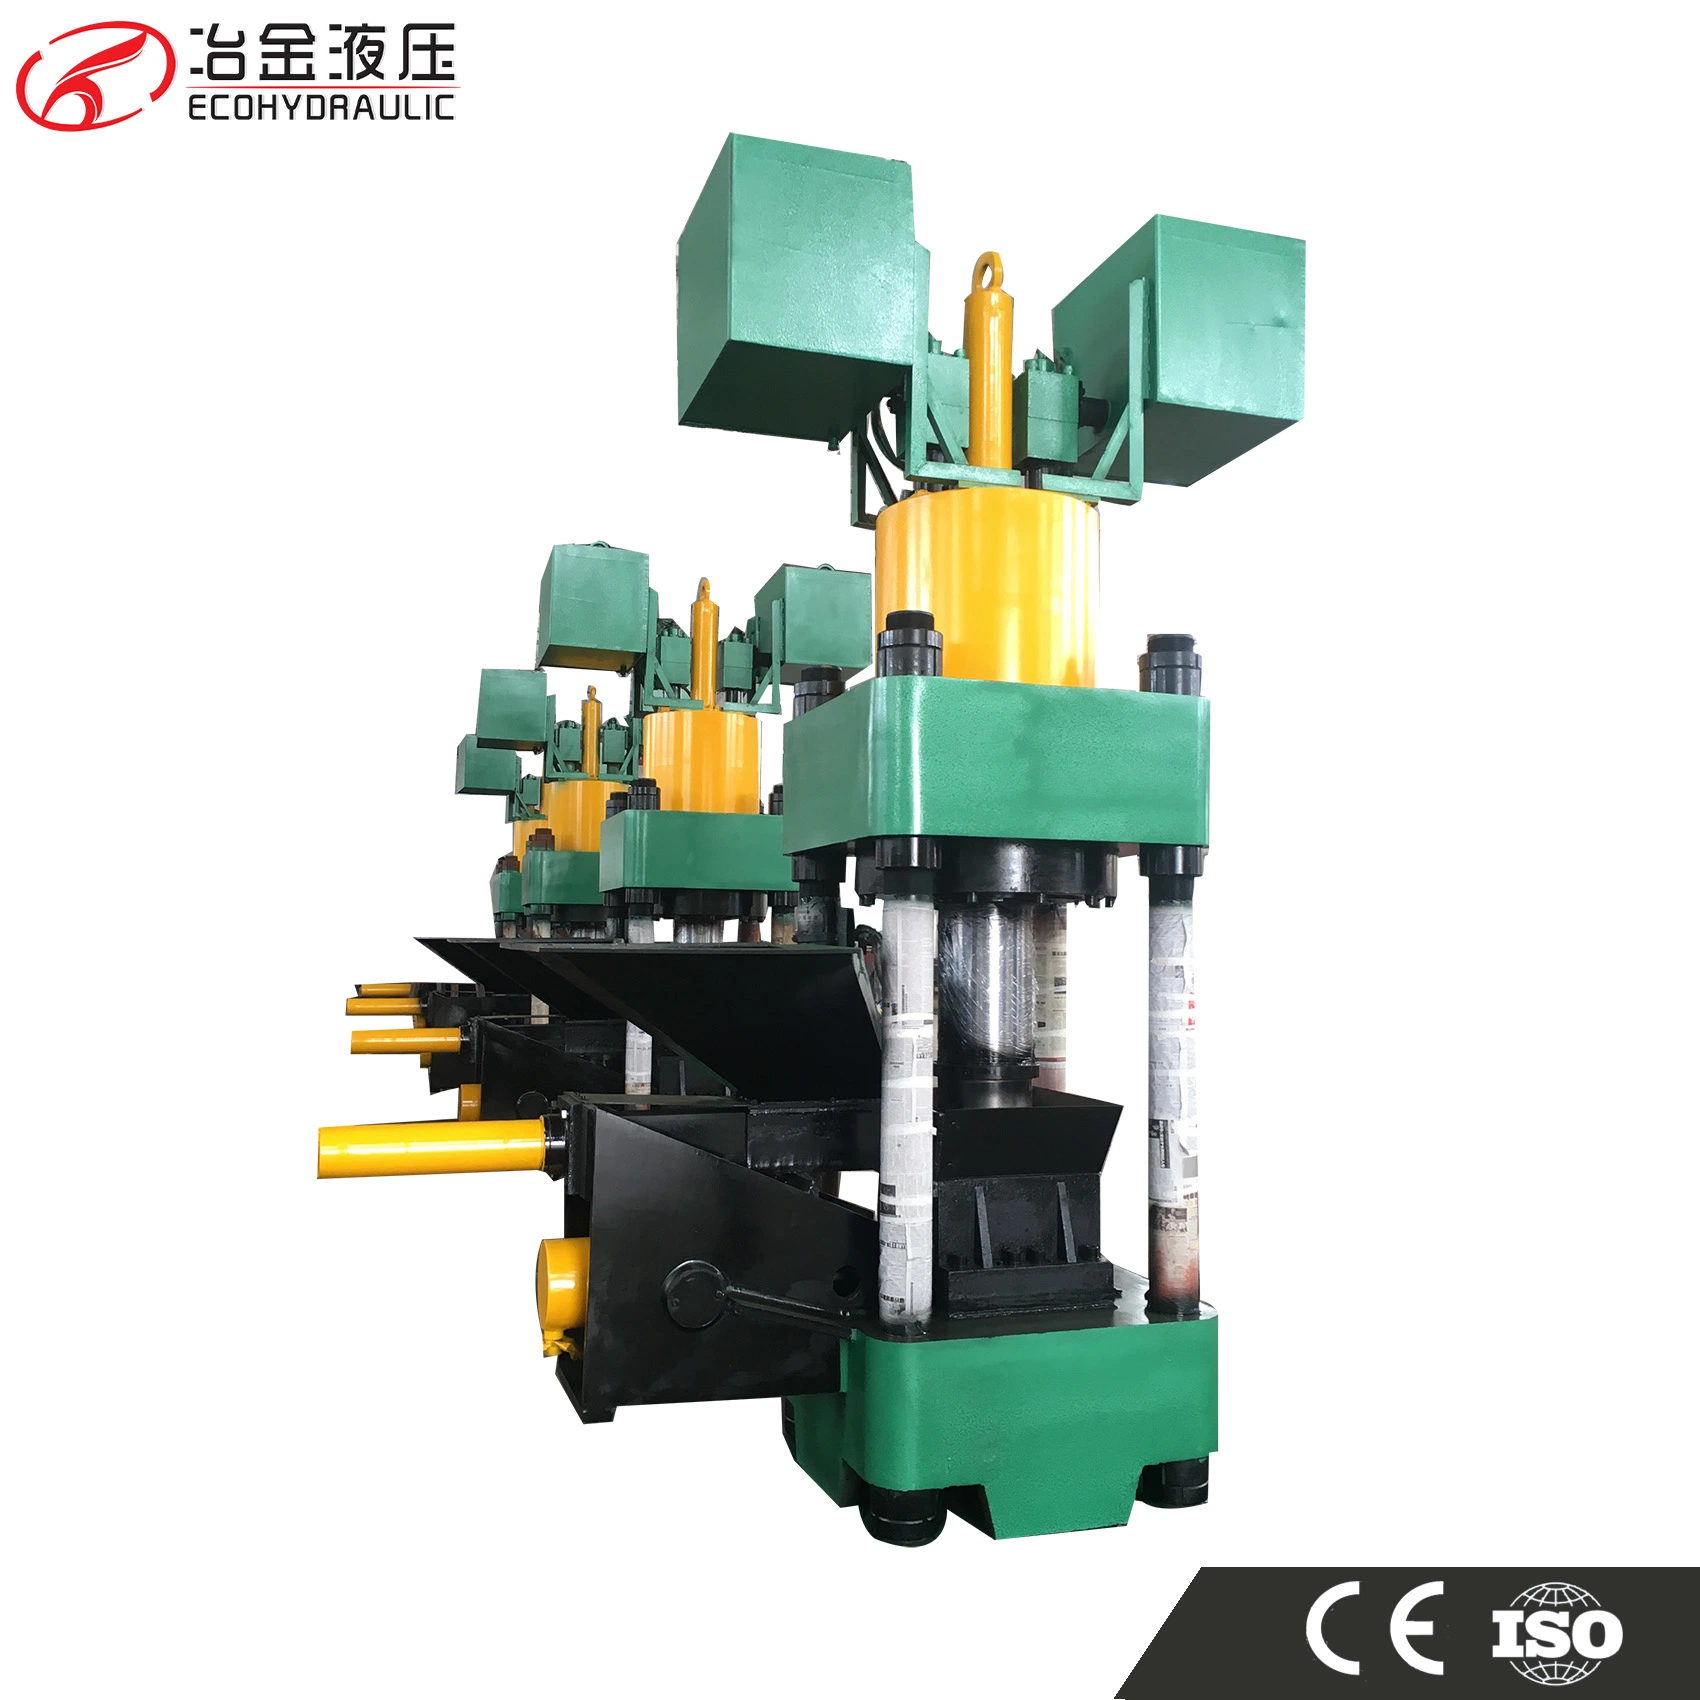 Y83-630 High Capacity Metal Briquette Chips Press Machine